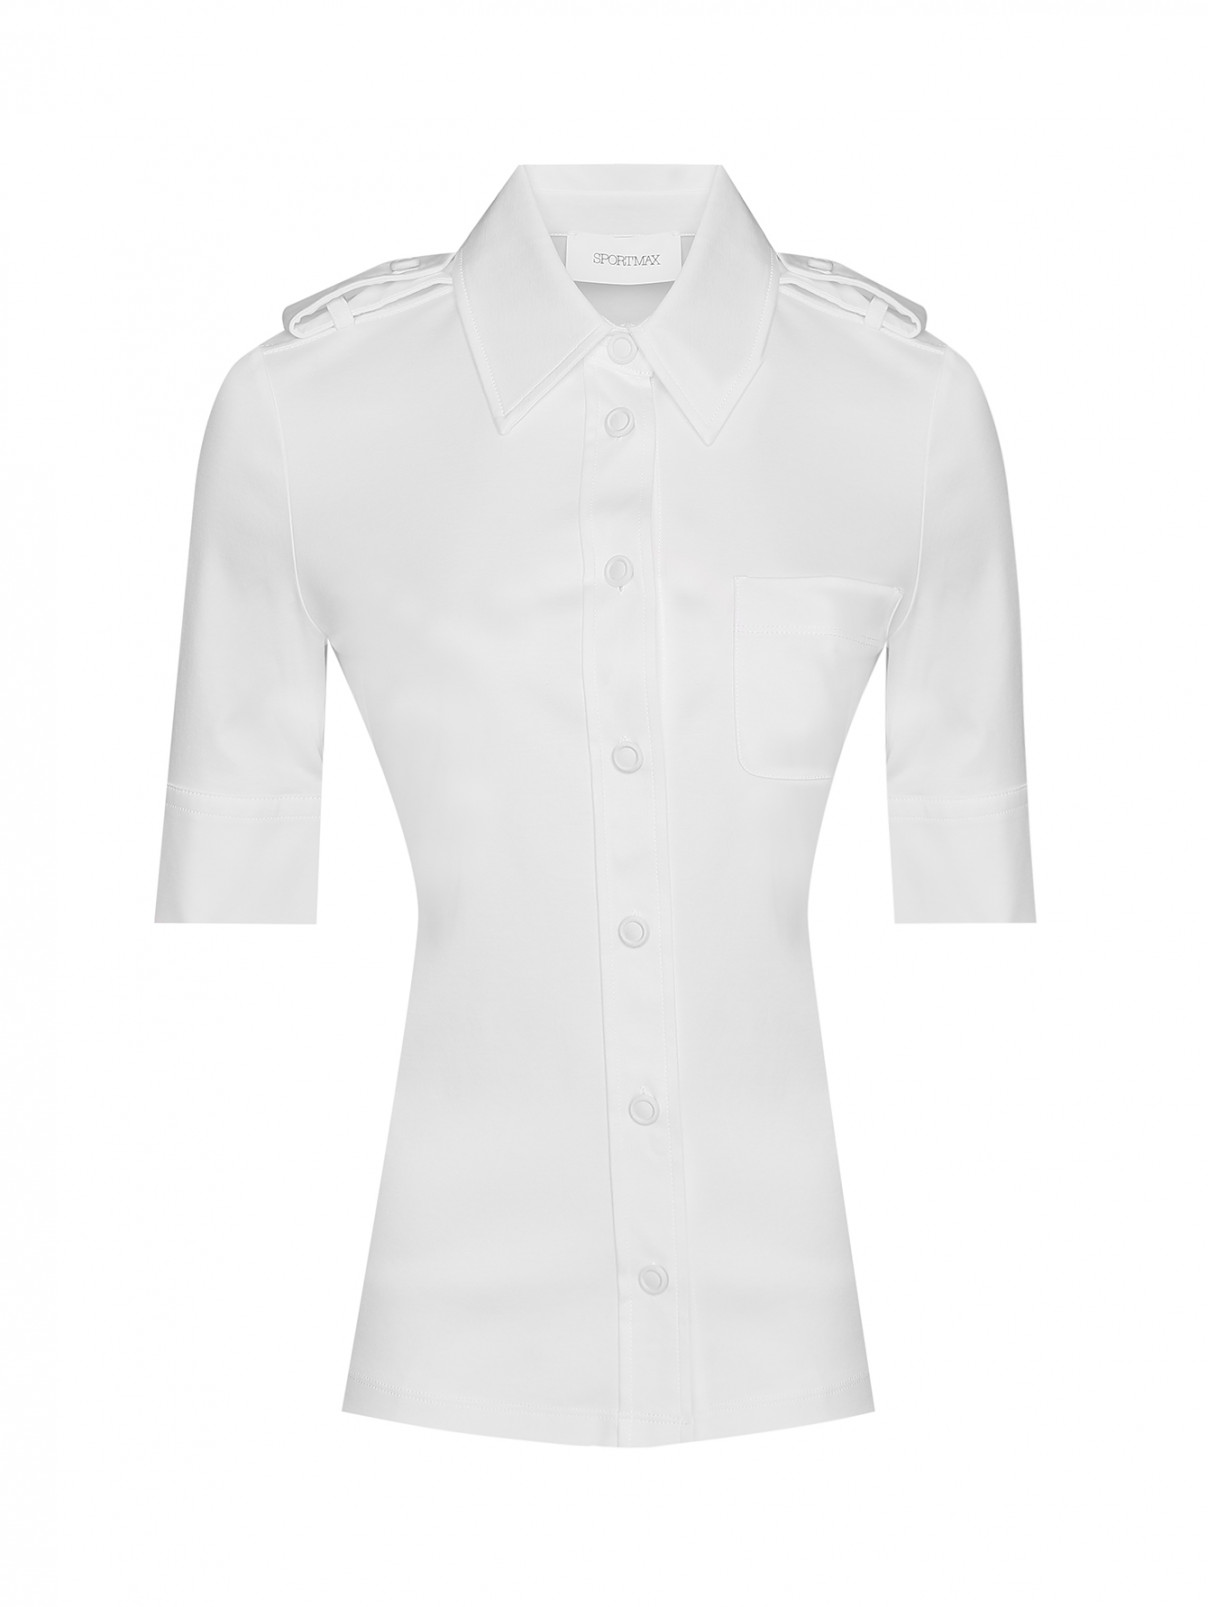 Рубашка с коротким рукавом на пуговицах Sportmax  –  Общий вид  – Цвет:  Белый